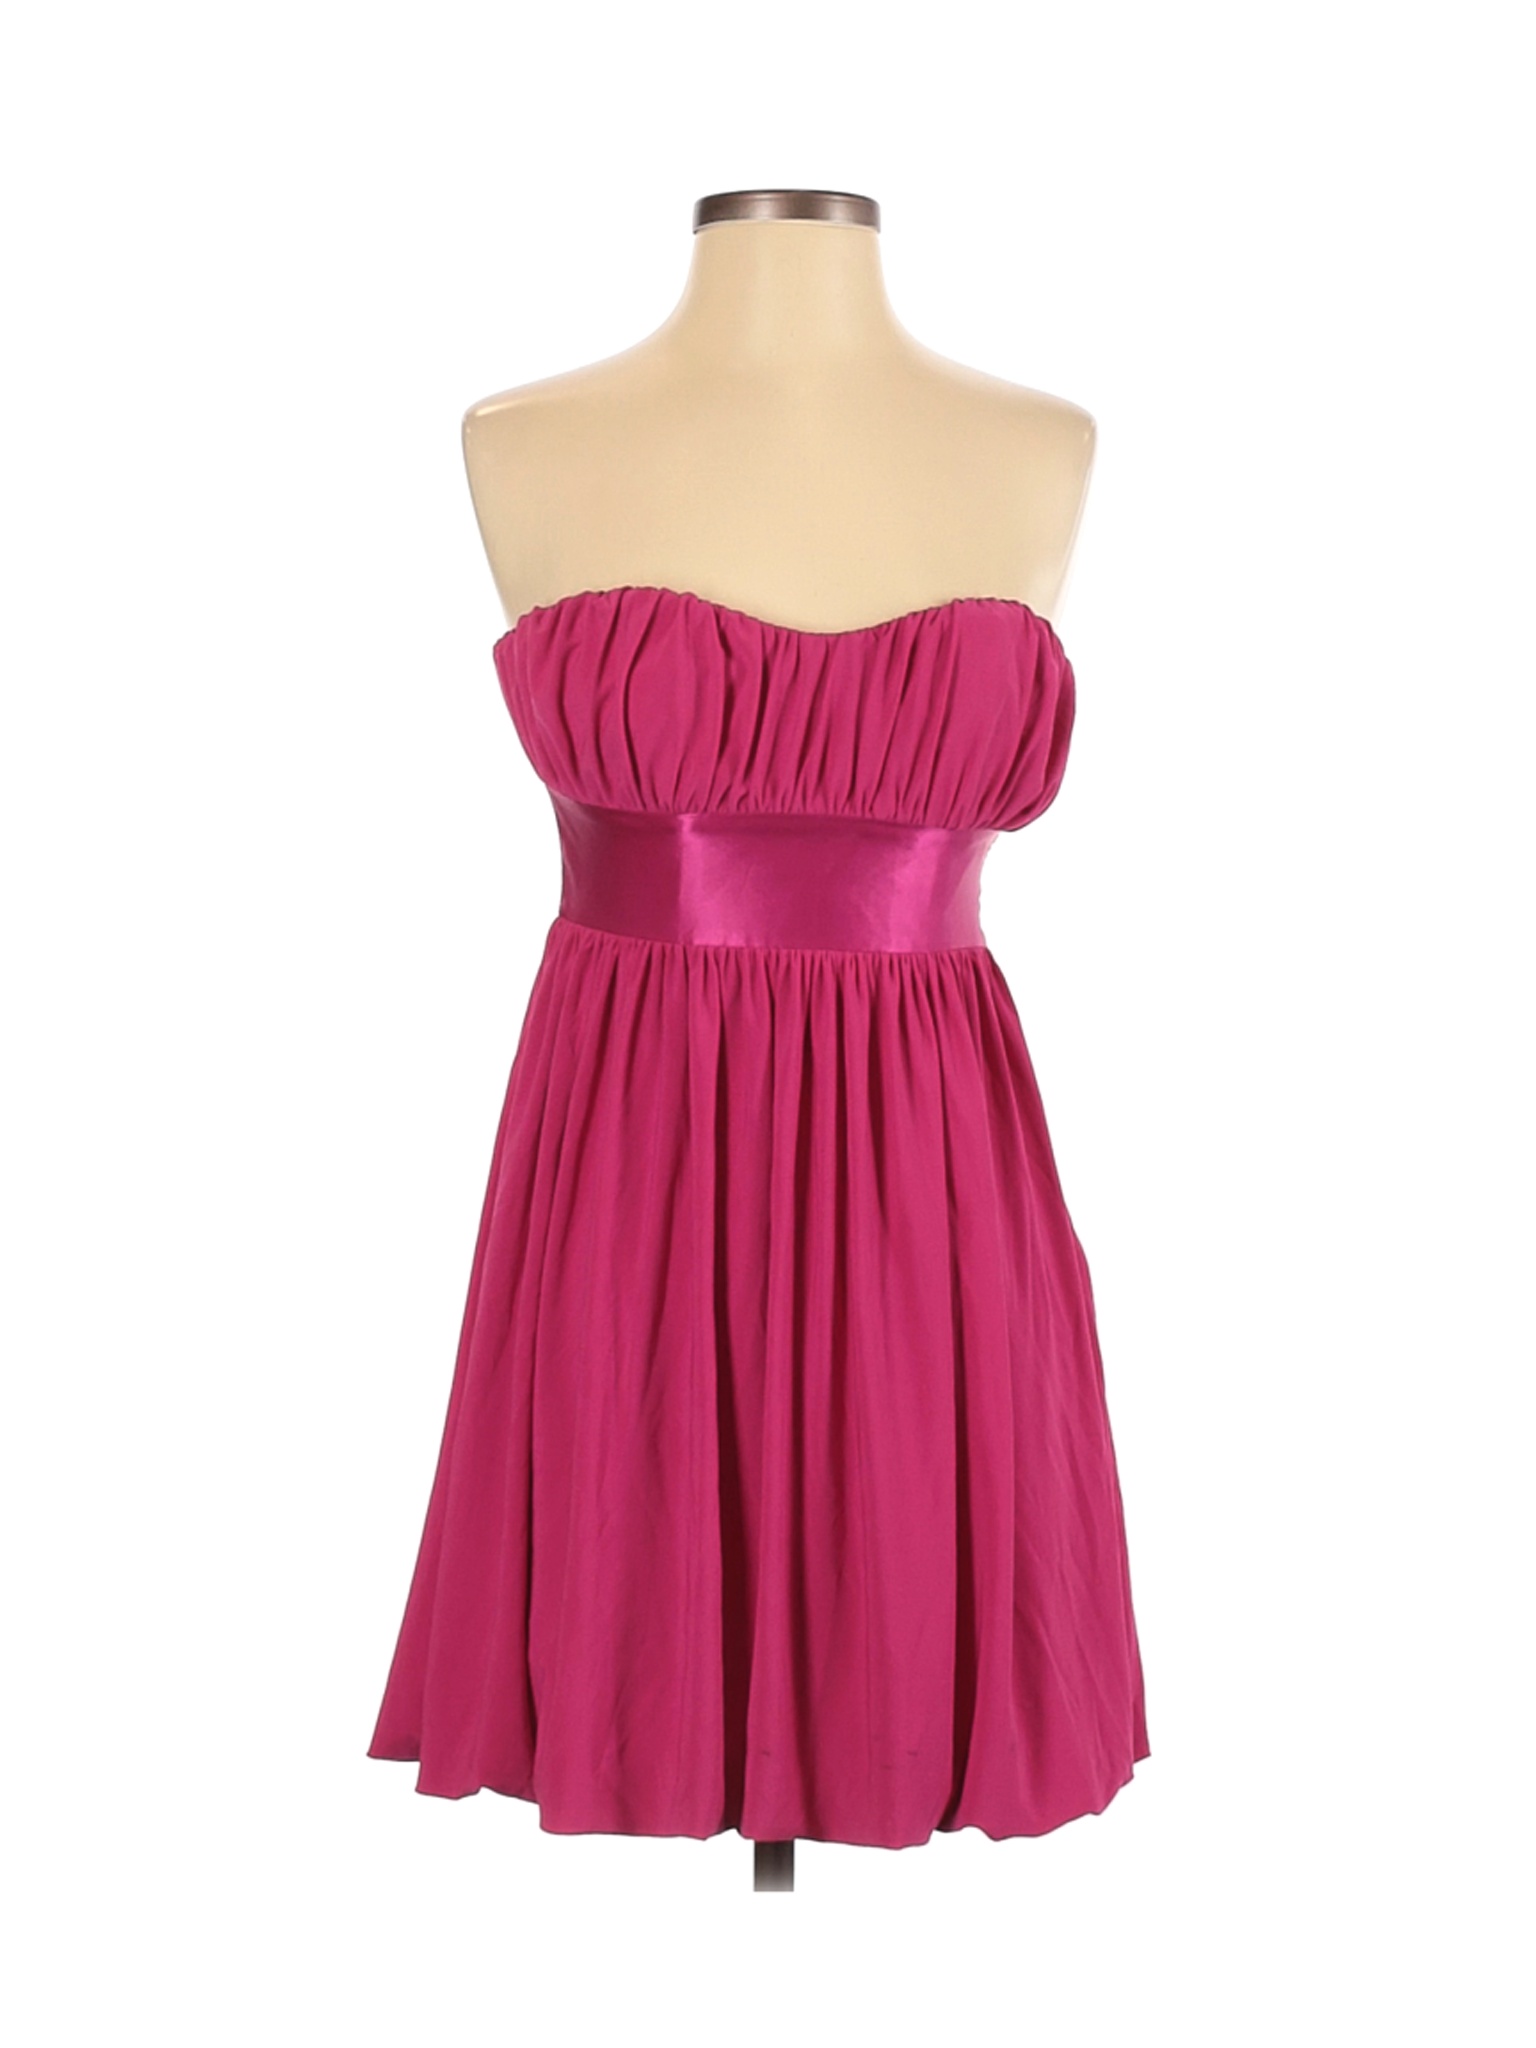 NWT Bebe Women Pink Cocktail Dress S | eBay